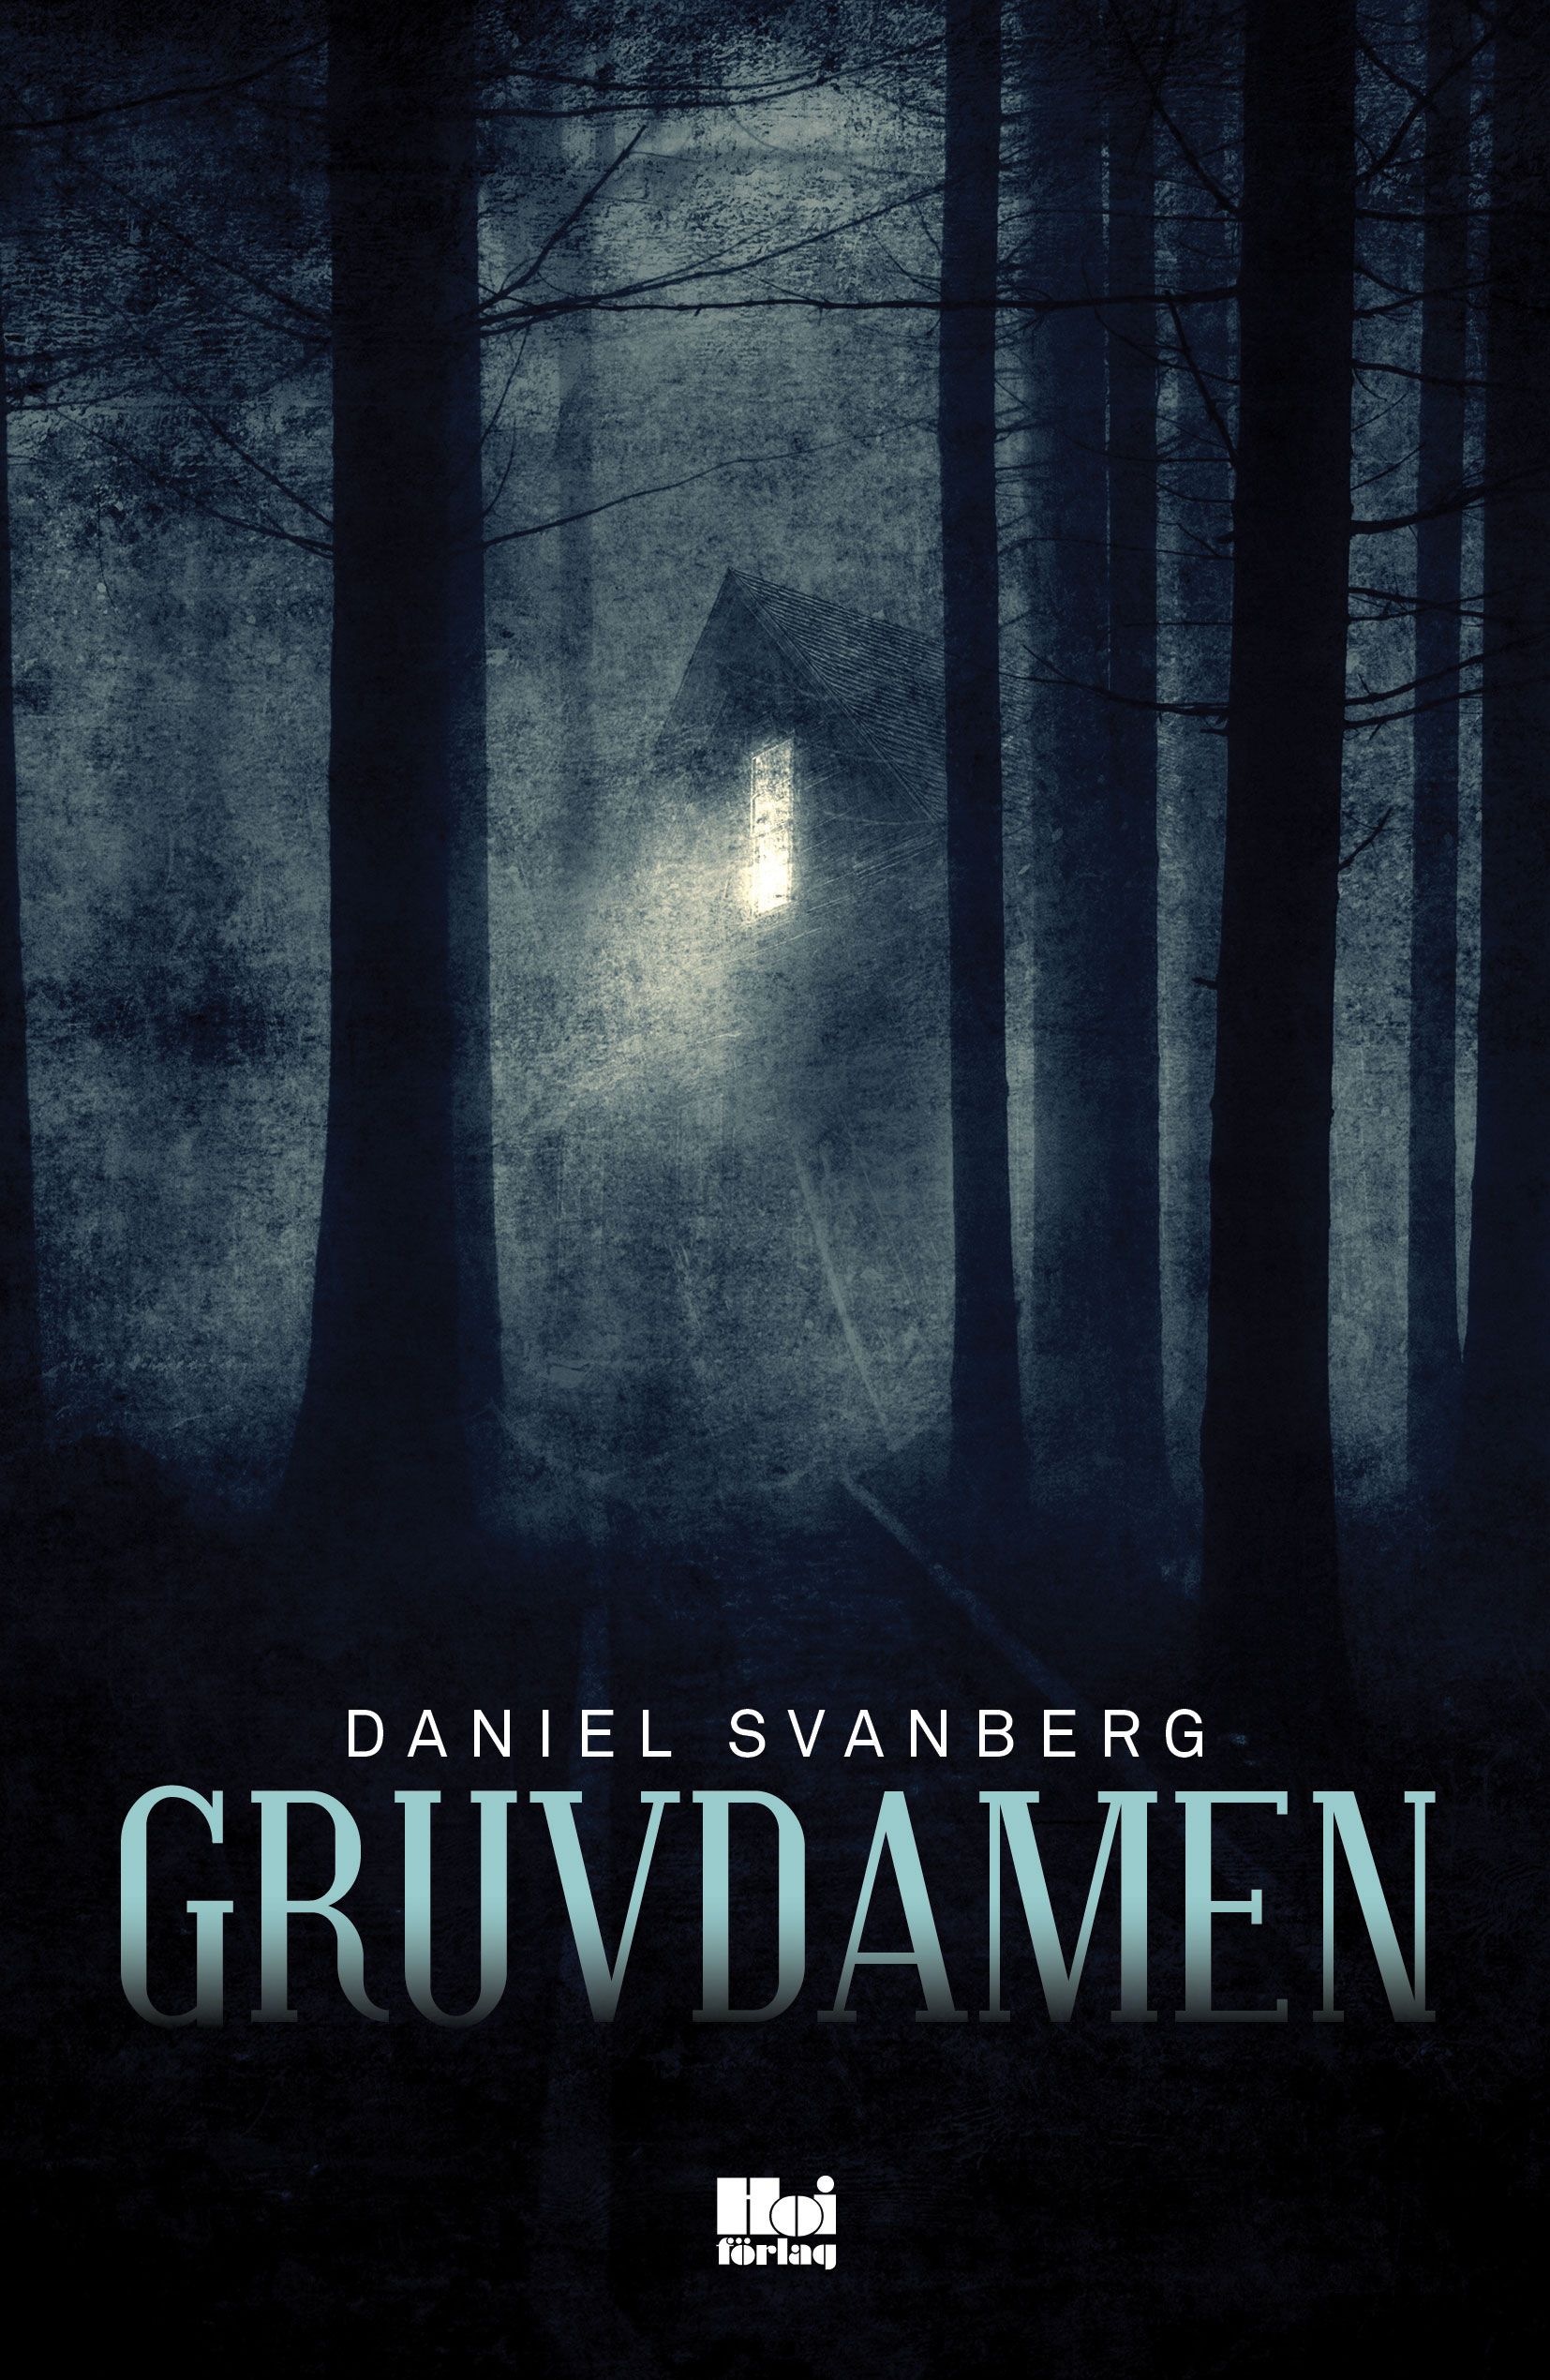 Gruvdamen, eBook by Daniel Svanberg